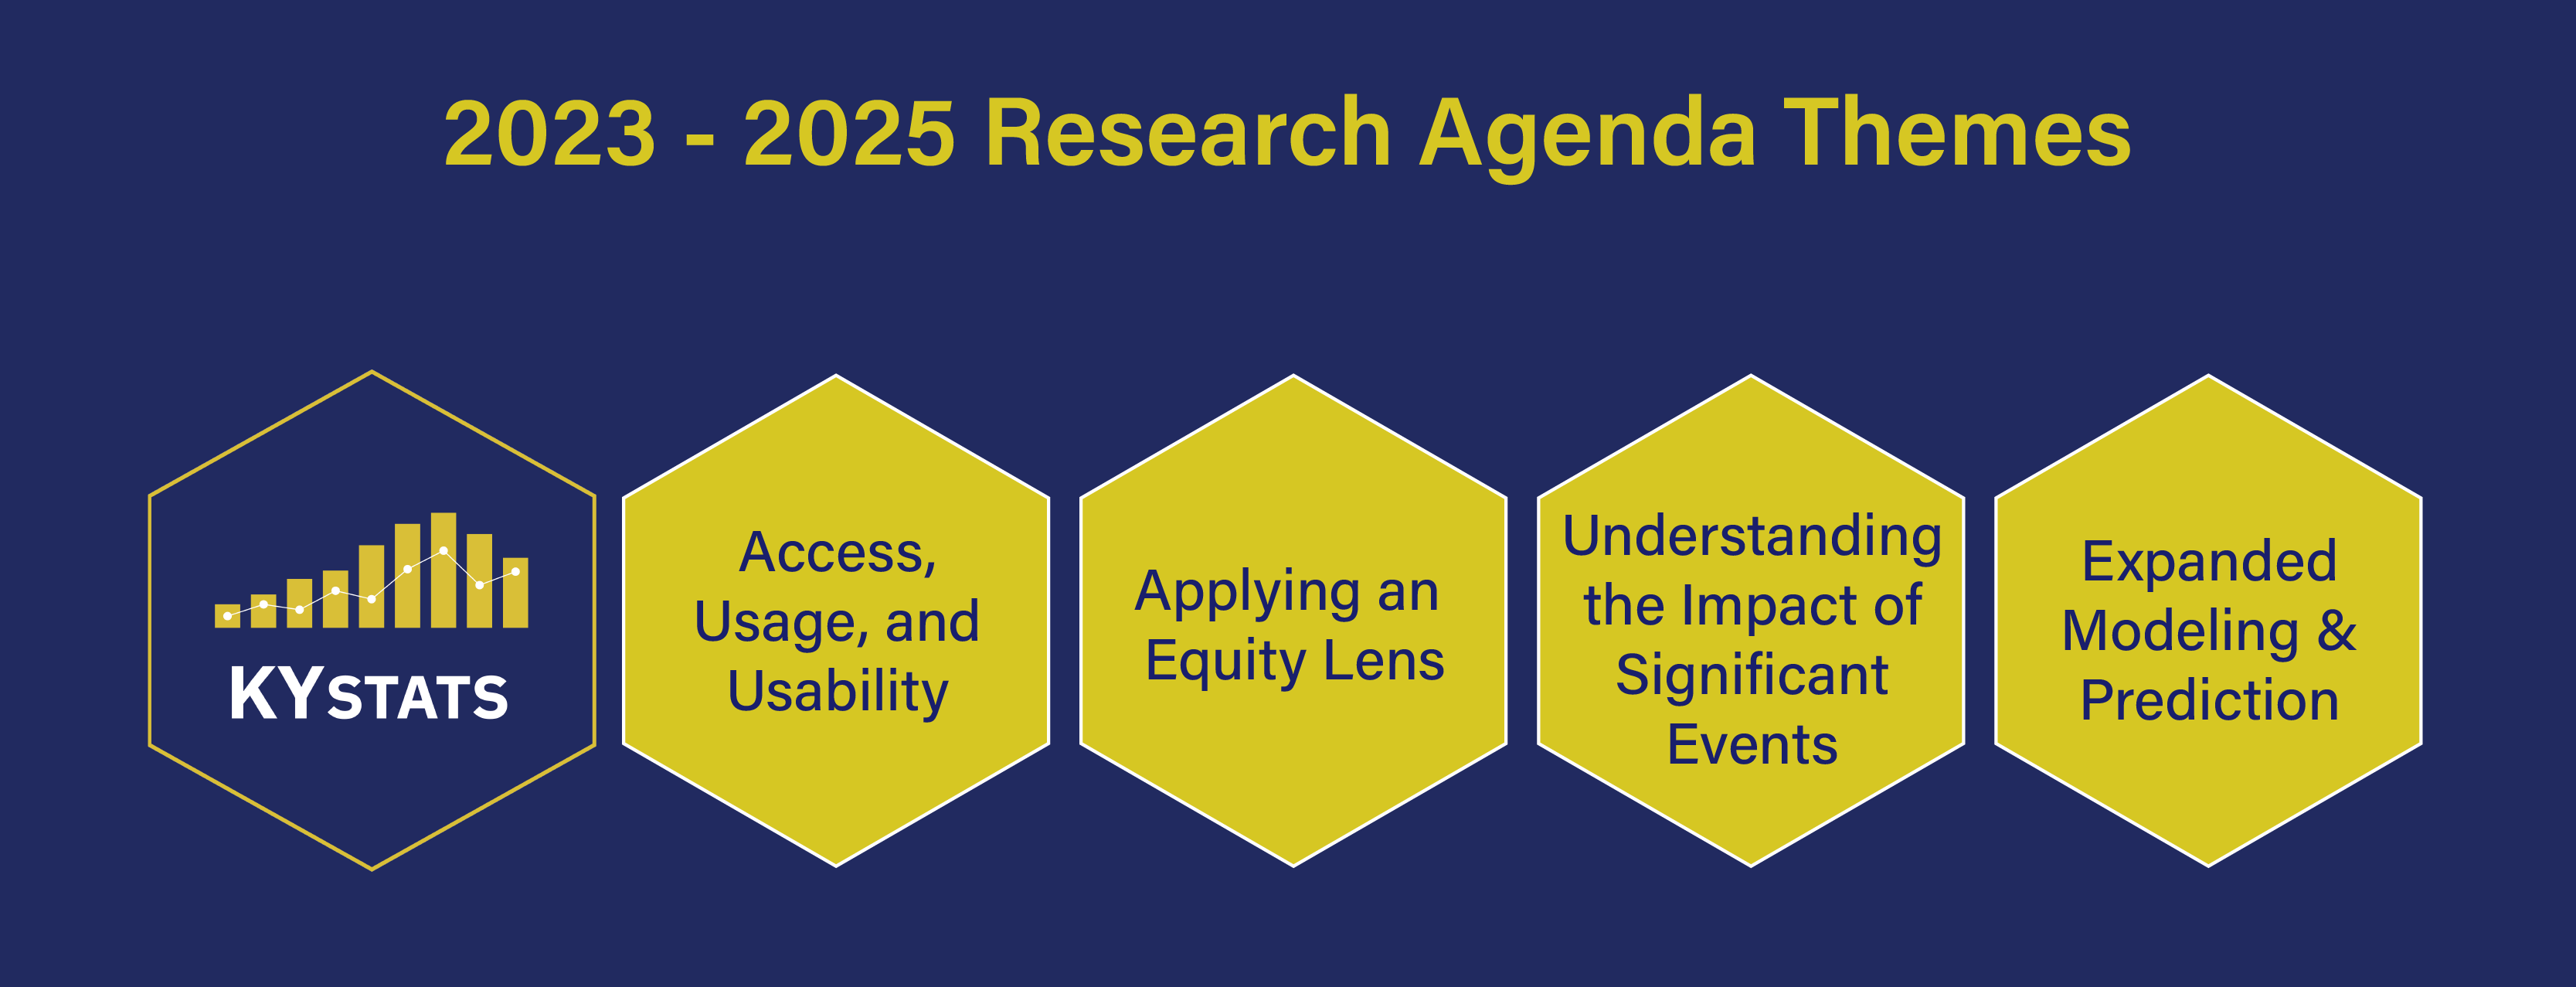 Research Agenda - KYSTATS